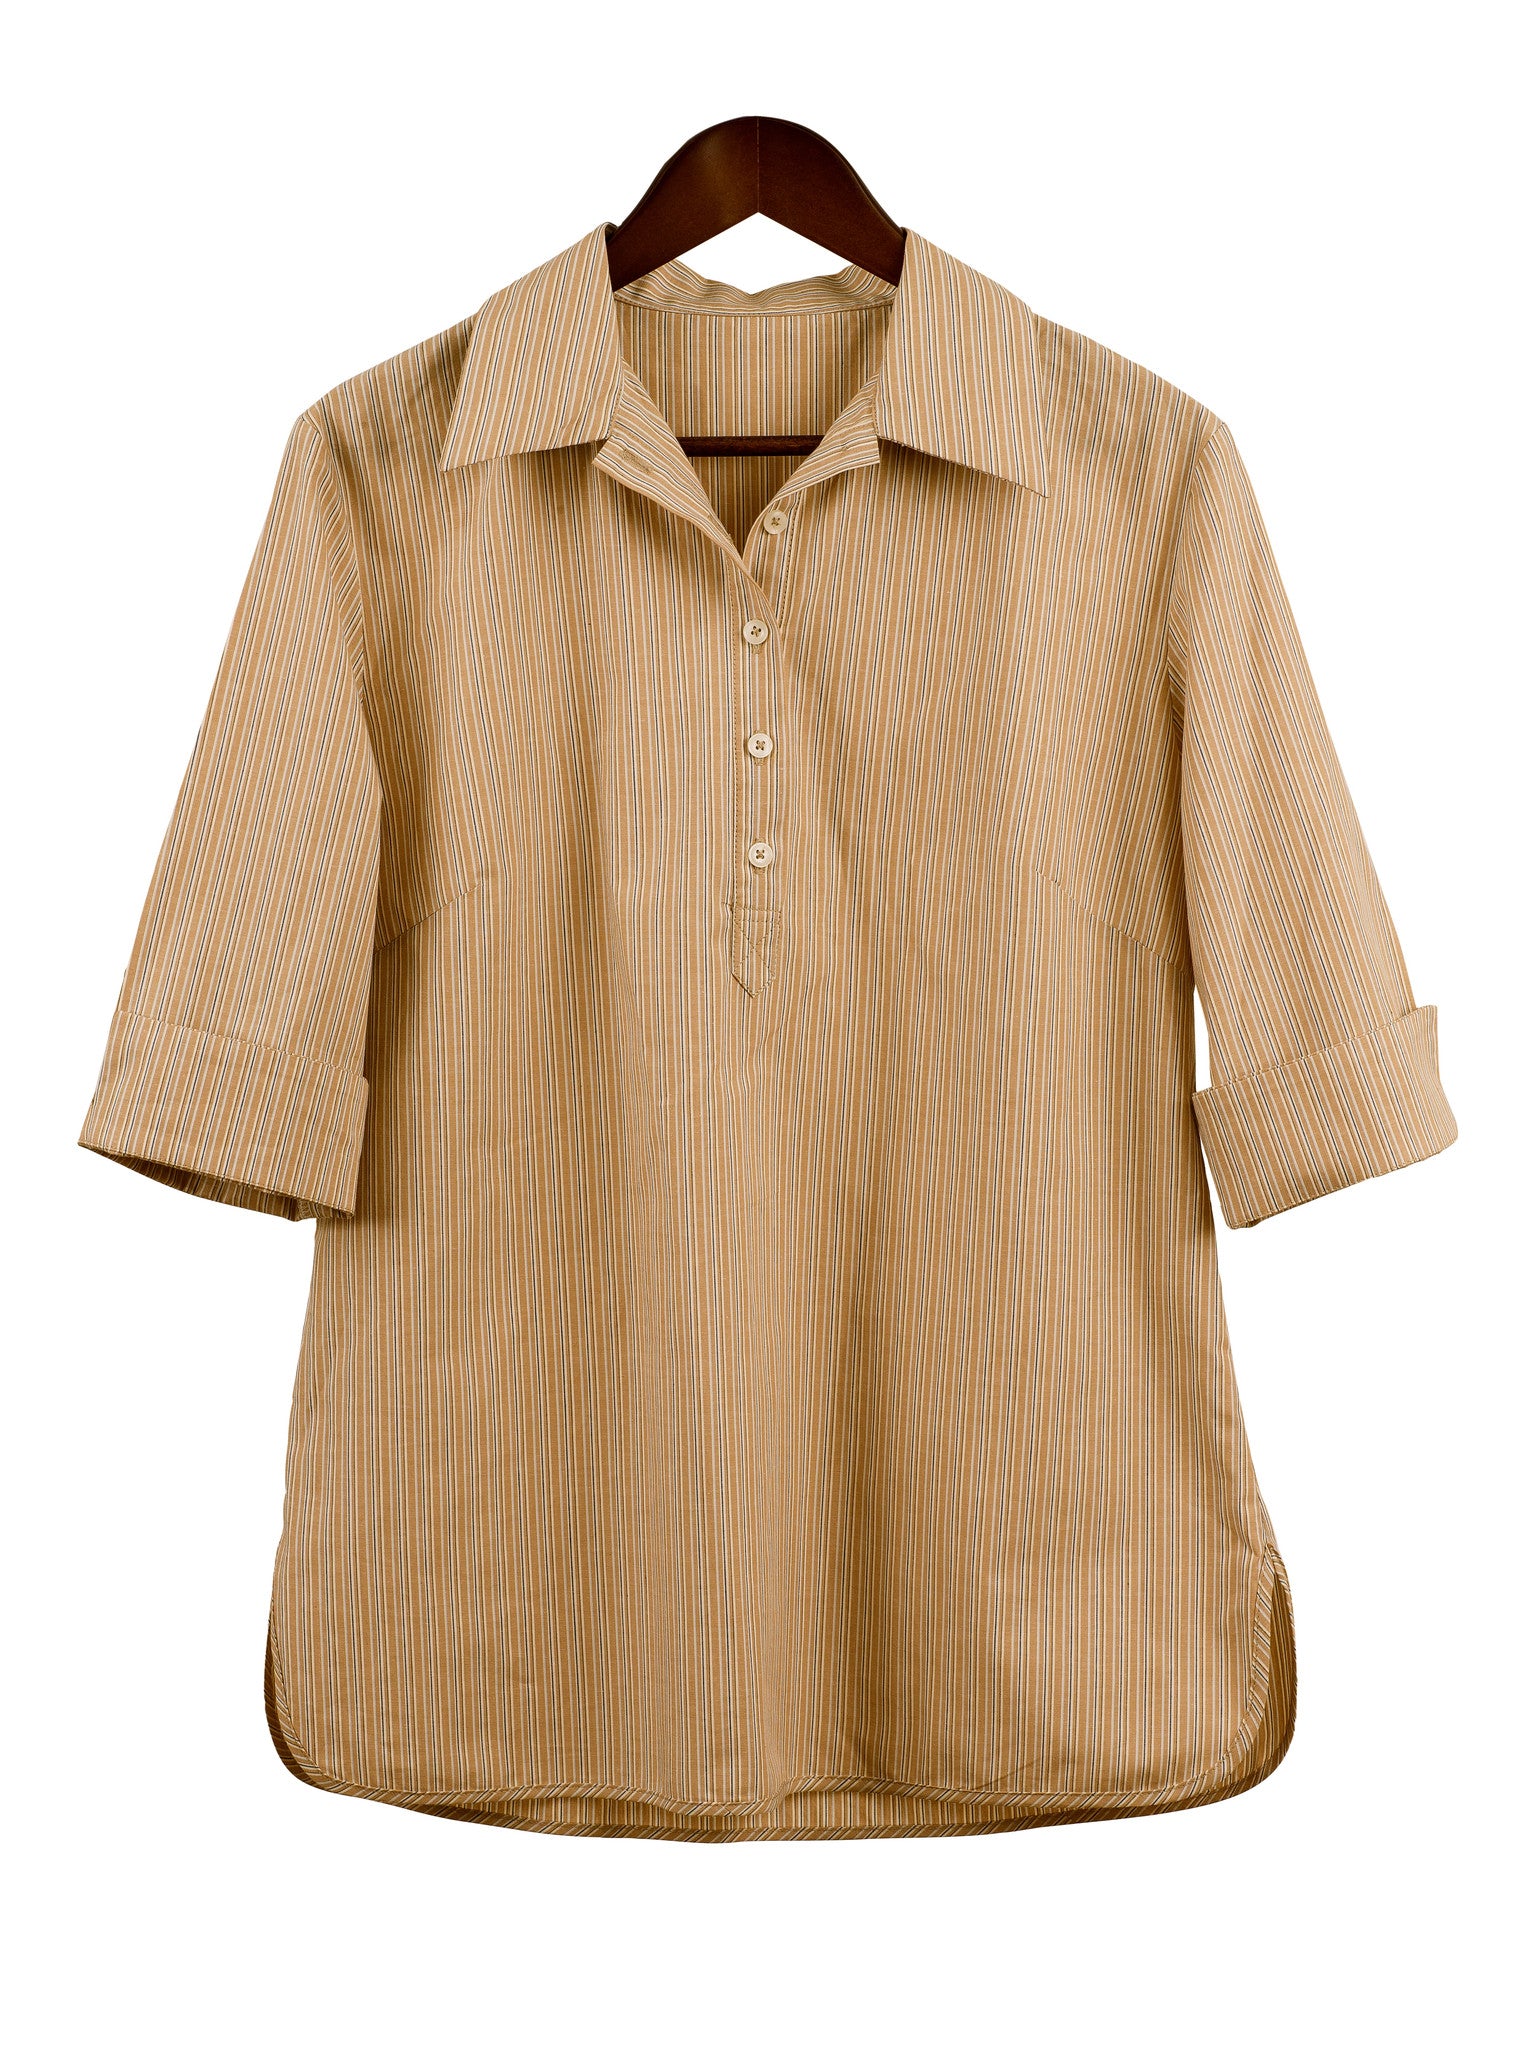 SAFARI SHIRT IN vintage stripe, Shirt, Hickman & Bousfield - Hickman & Bousfield, Safari and Travel Clothing